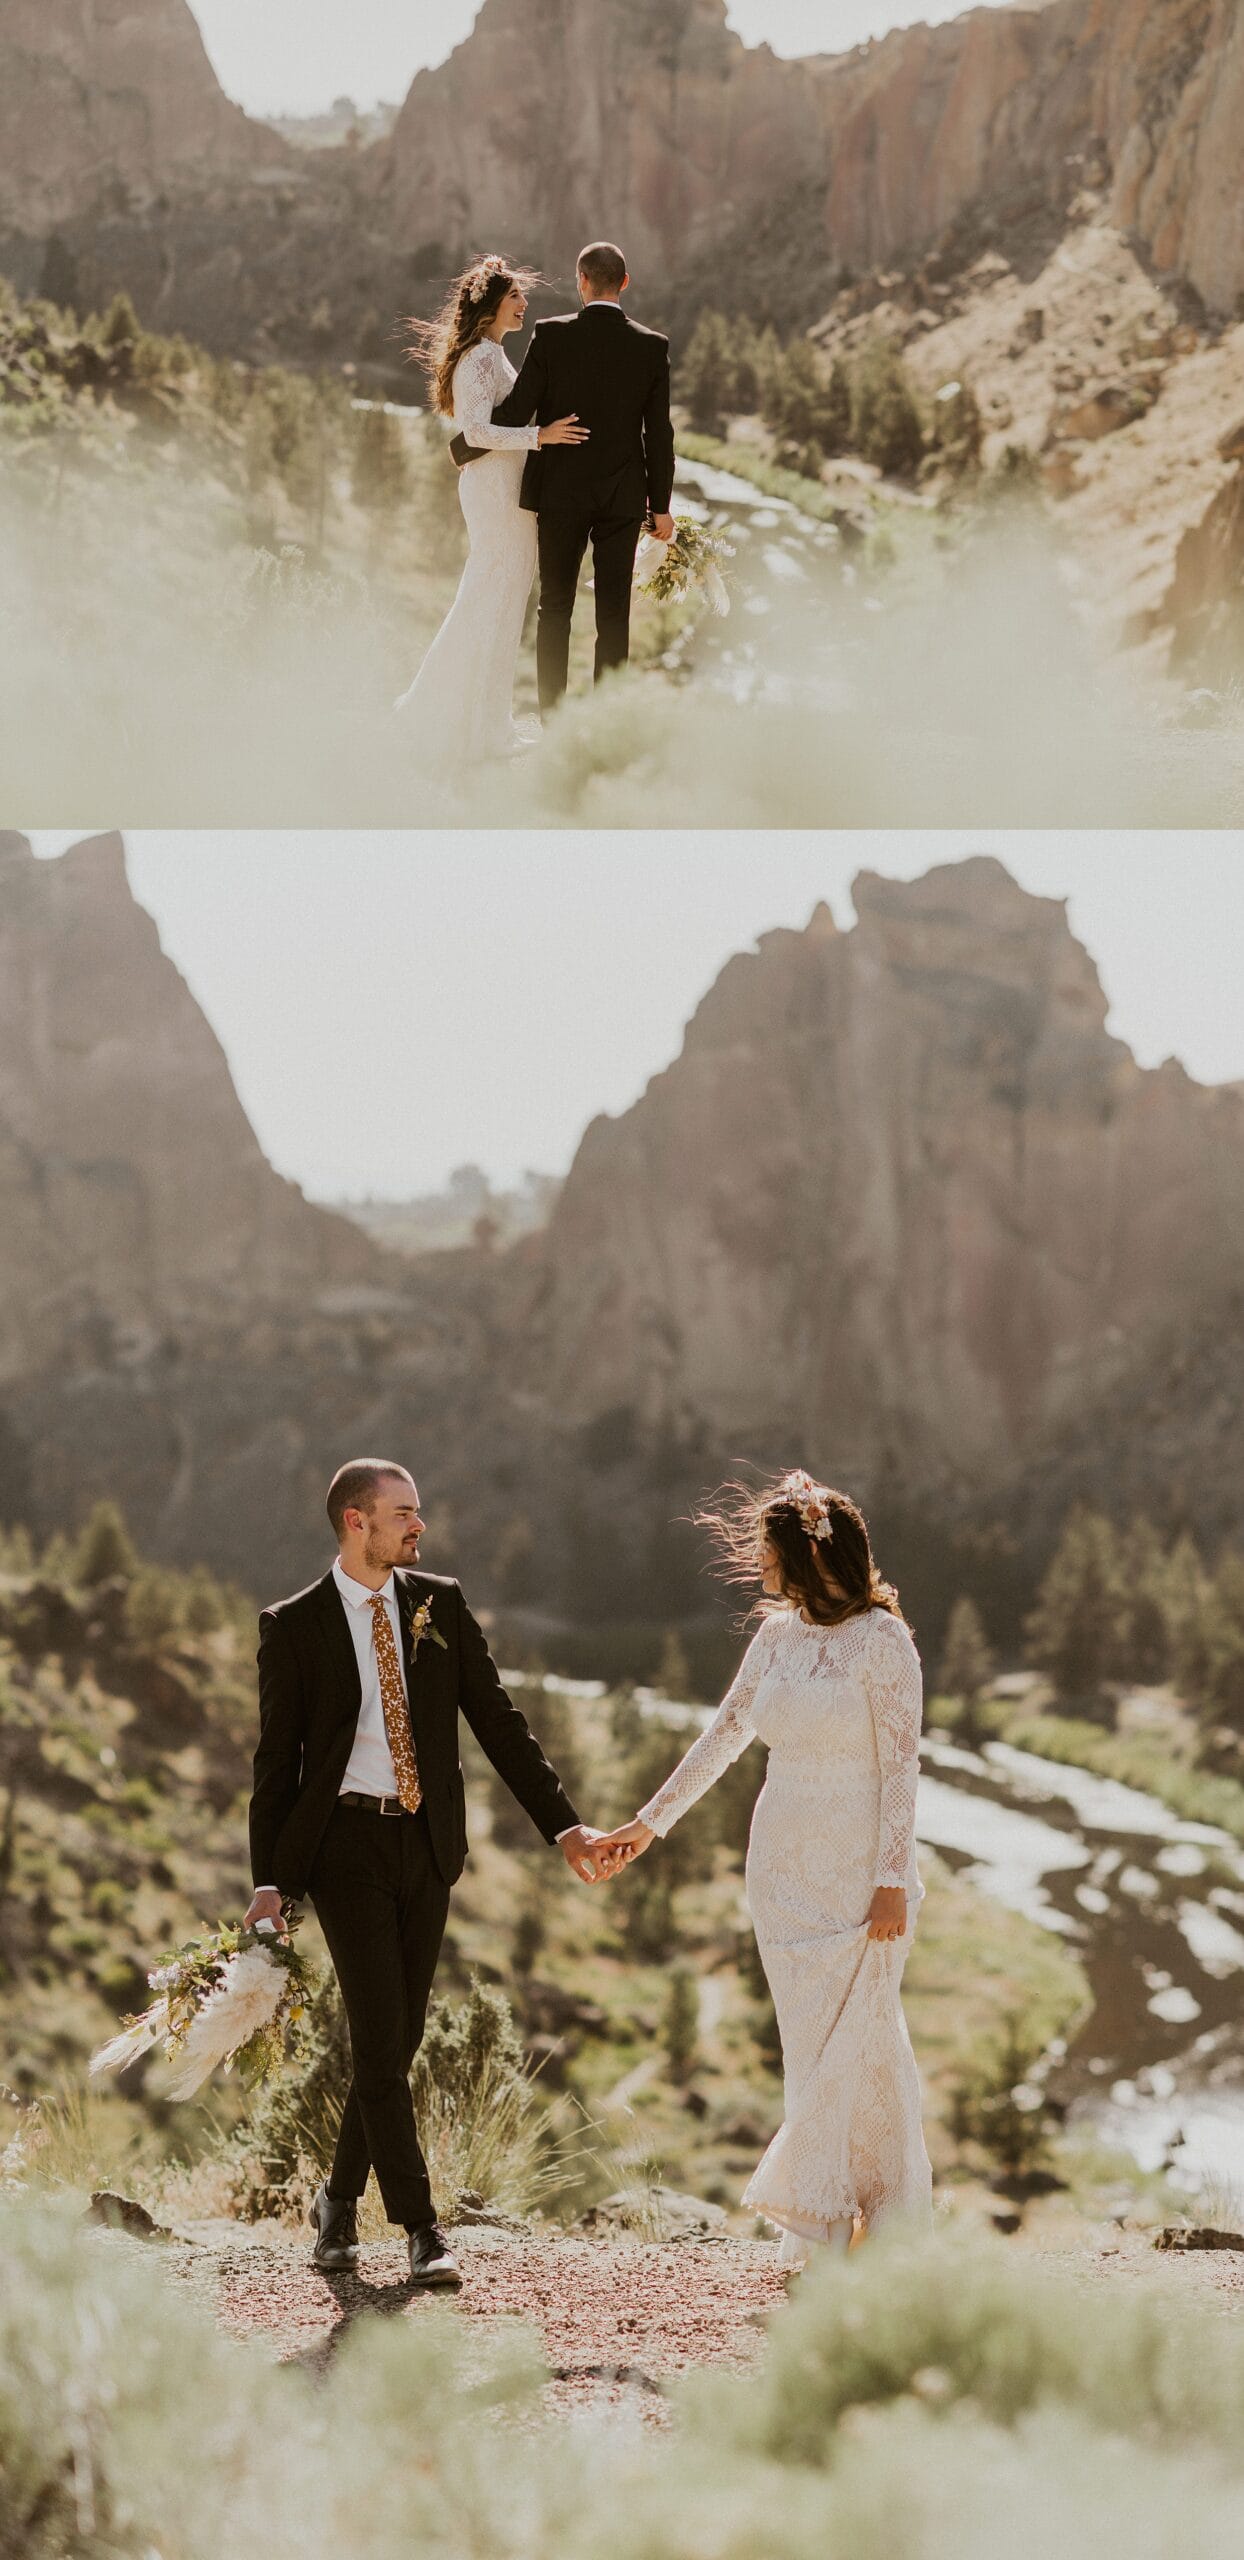 bride and groom holding hands smith rock state park landscape

